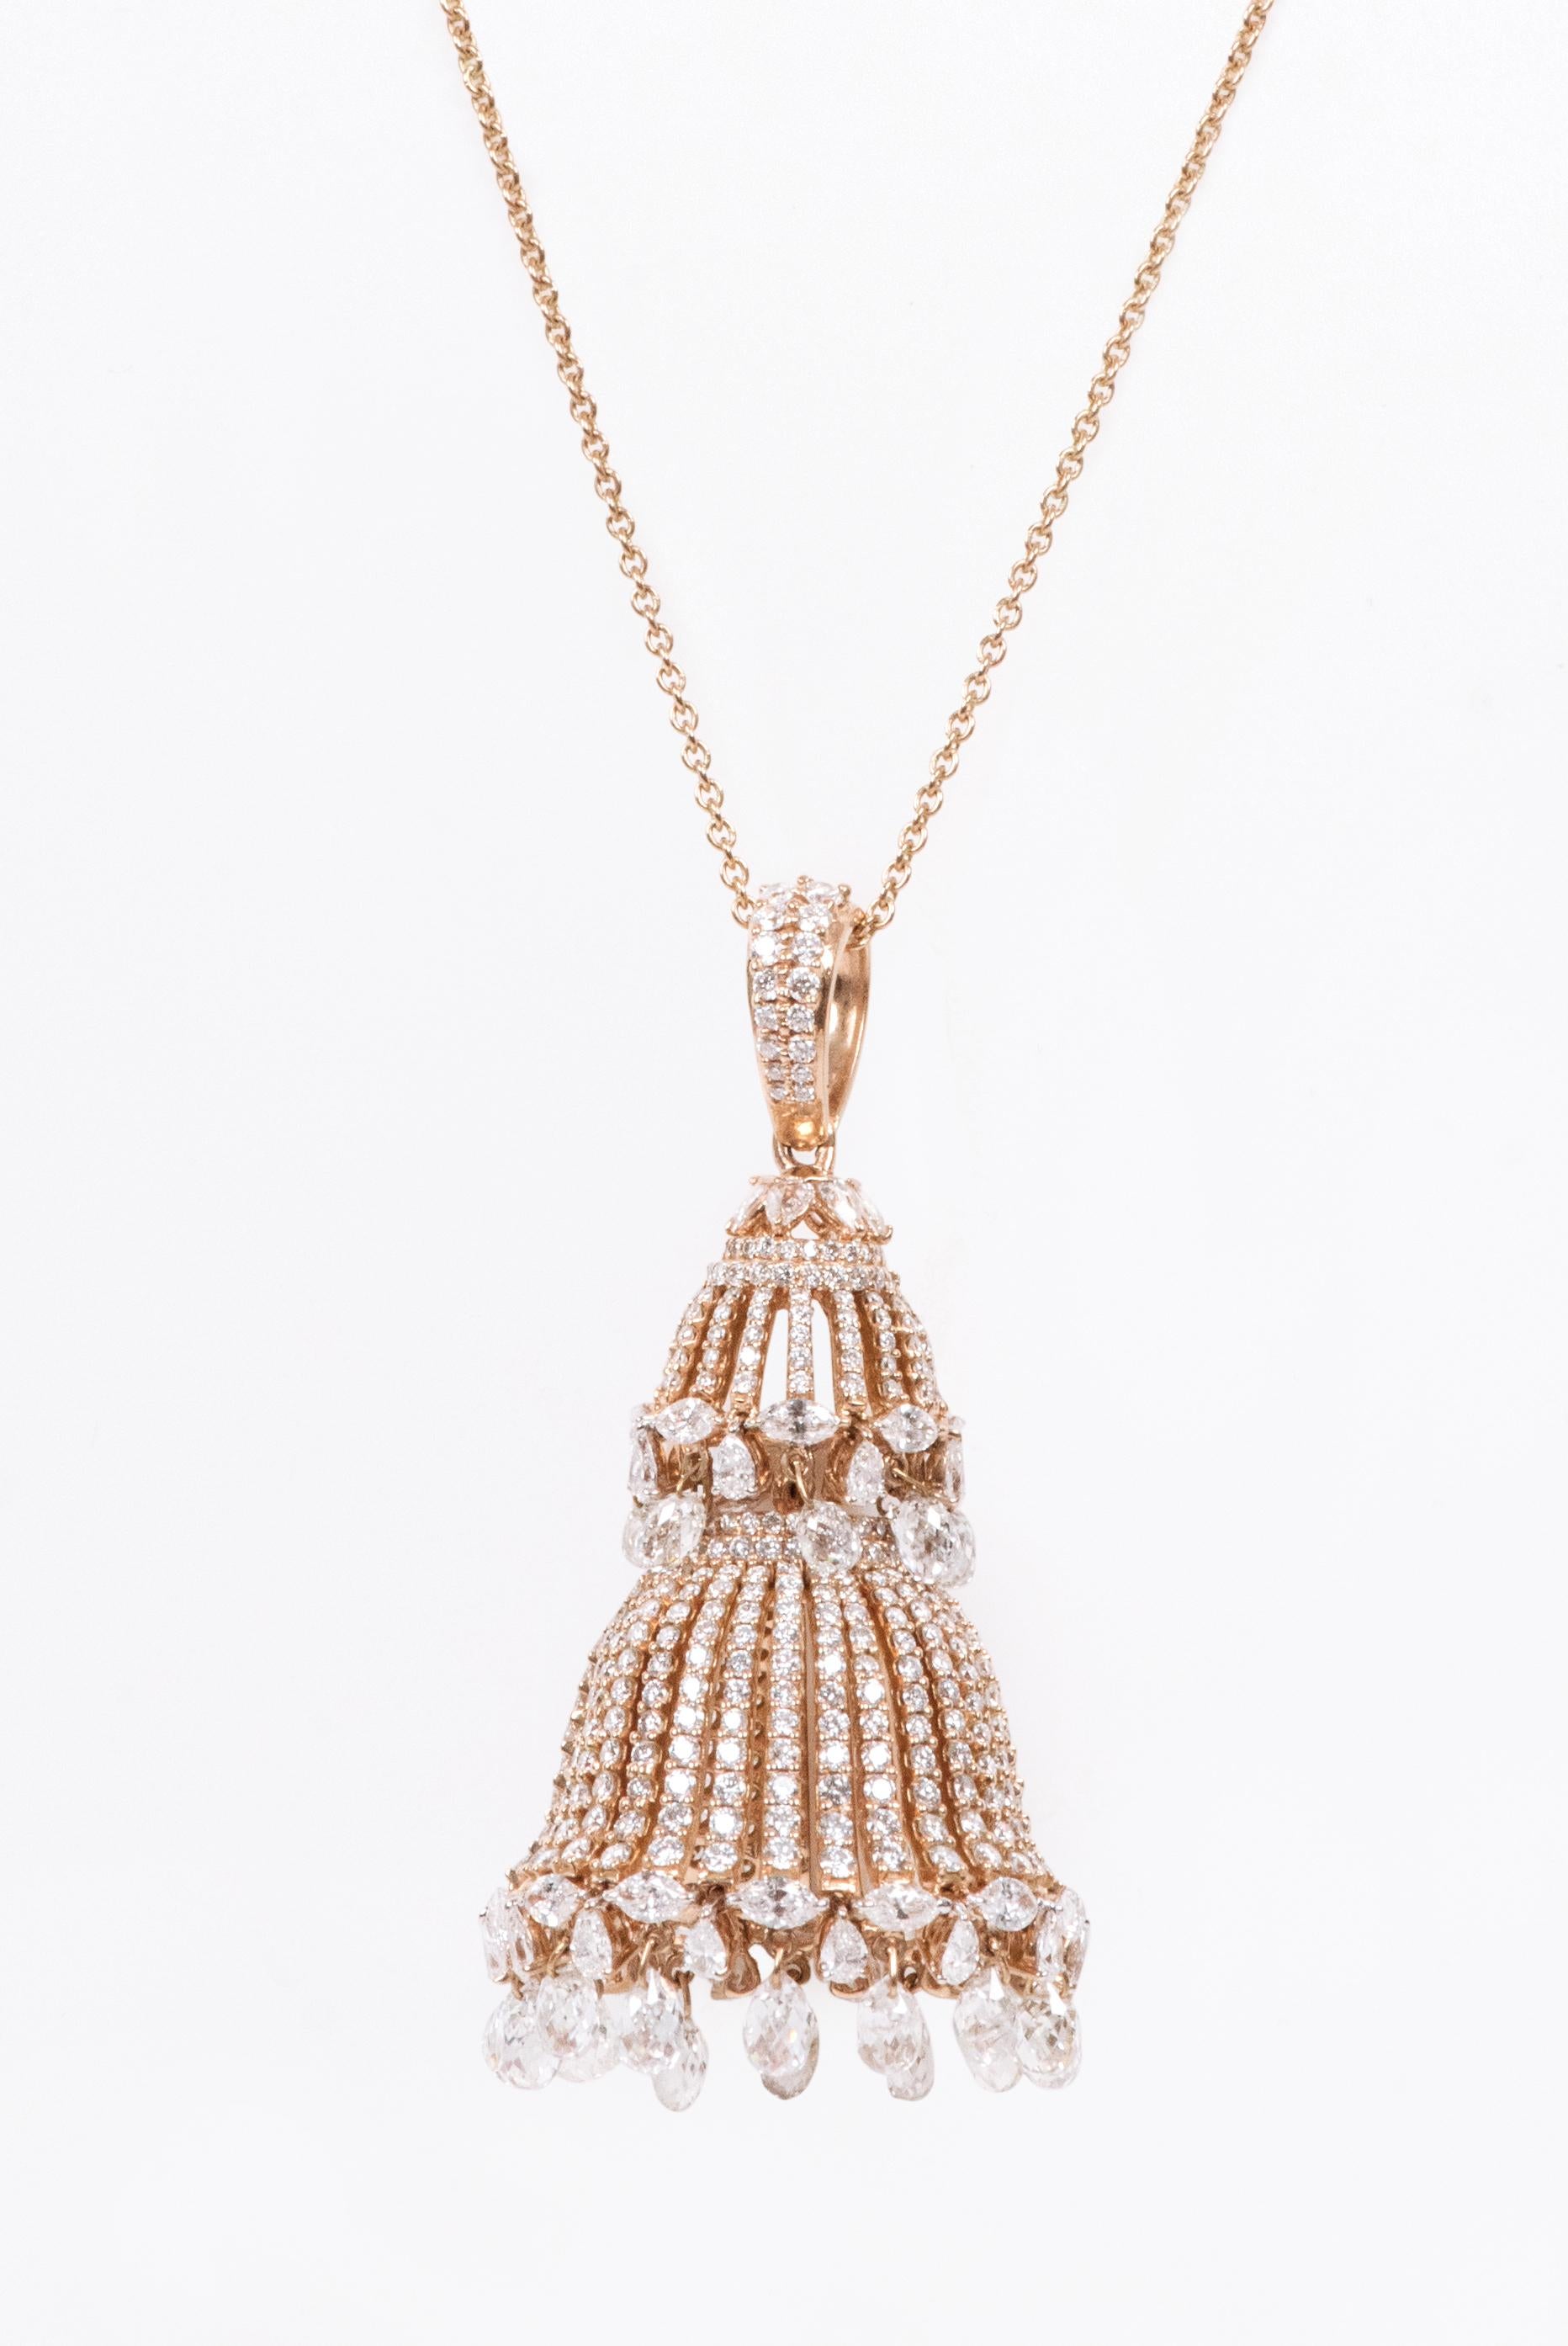 18 Karat Gold 12.45 Carat Diamond Chandelier Drop Pendant with Link Necklace For Sale 2